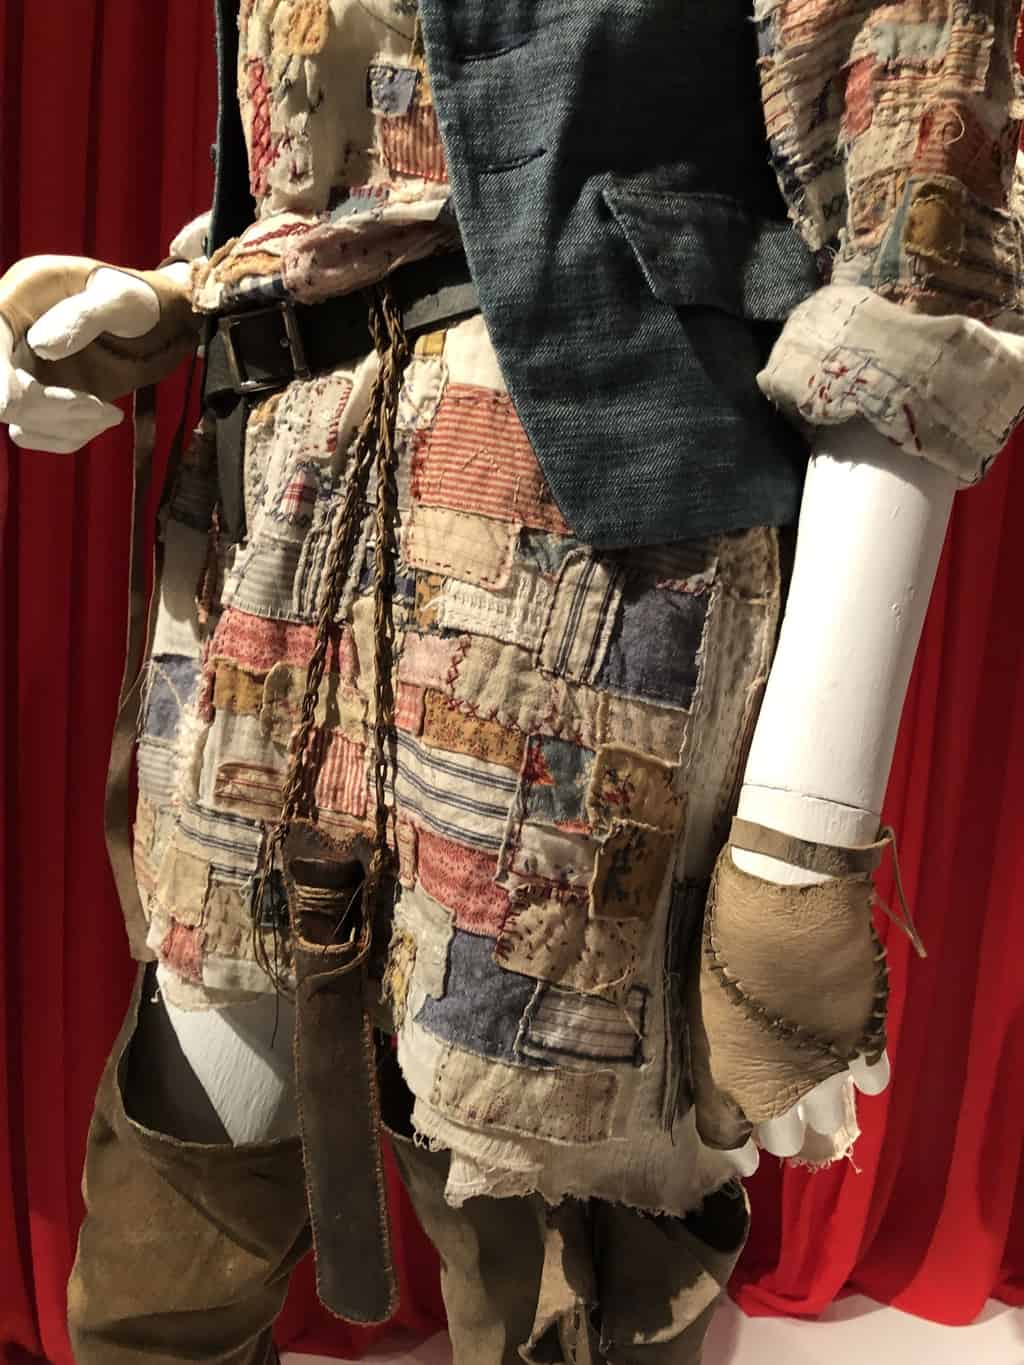 Outlander costumes, FIDM exhibit 2019